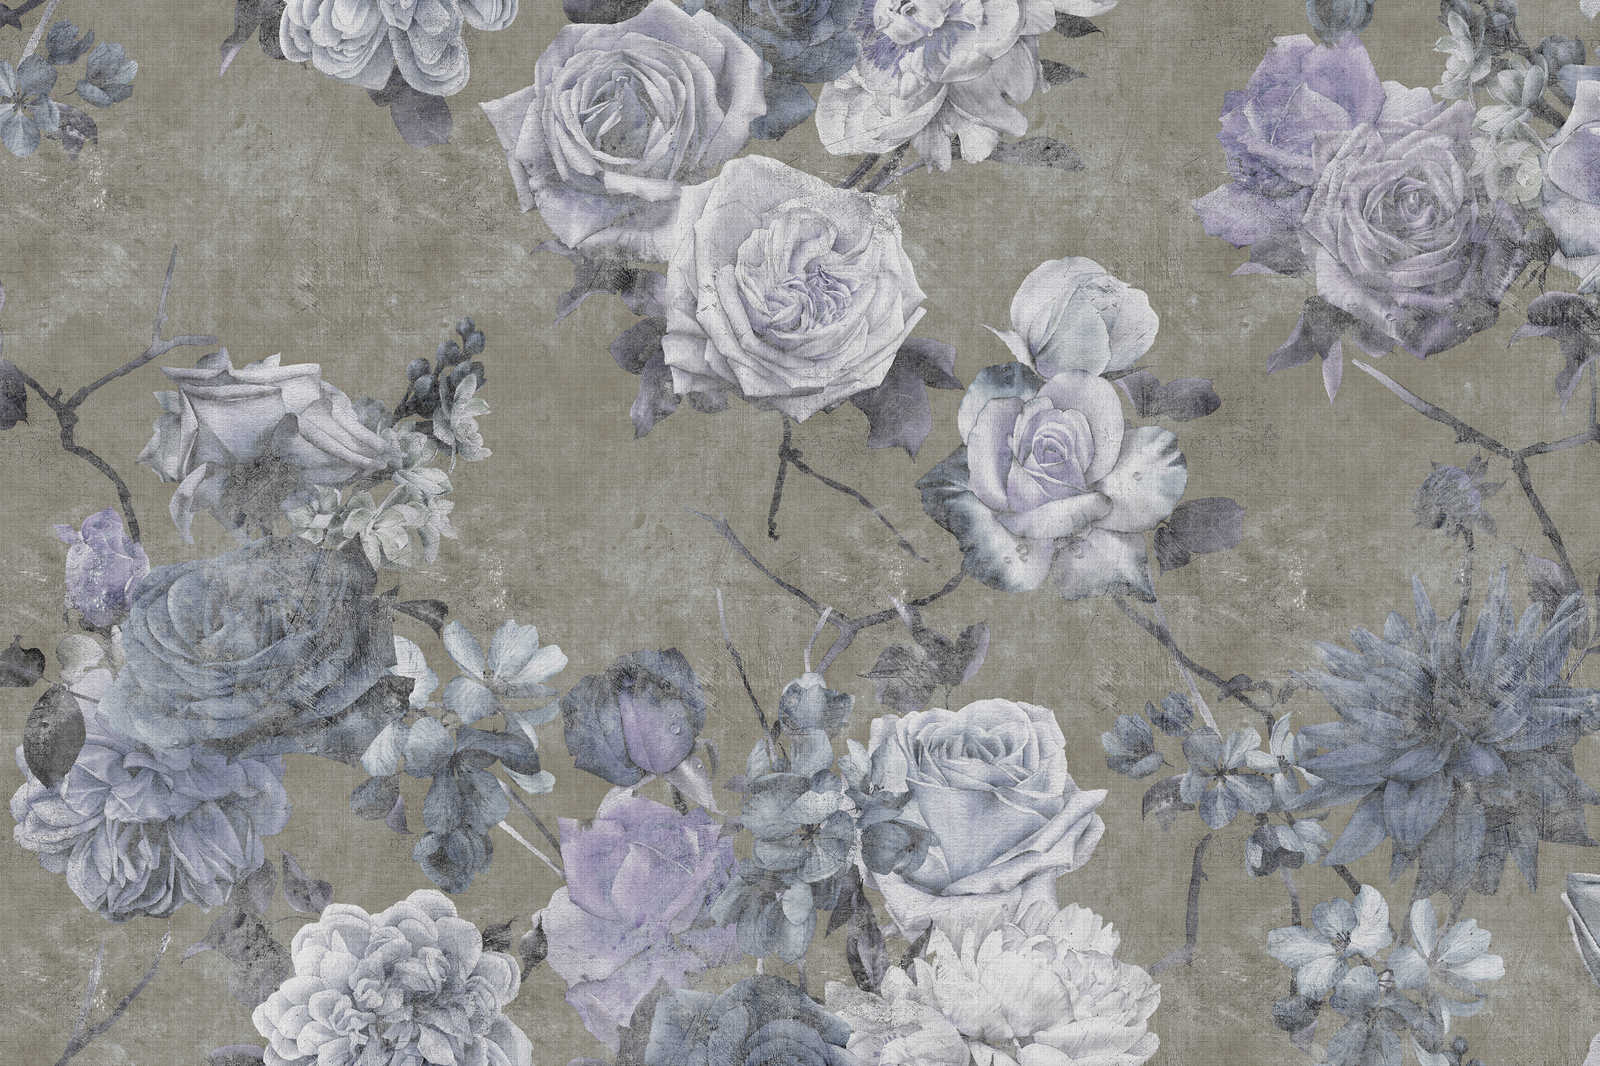             Sleeping Beauty 1 - Leinwandbild Rosenblüten im Used Look – 1,20 m x 0,80 m
        